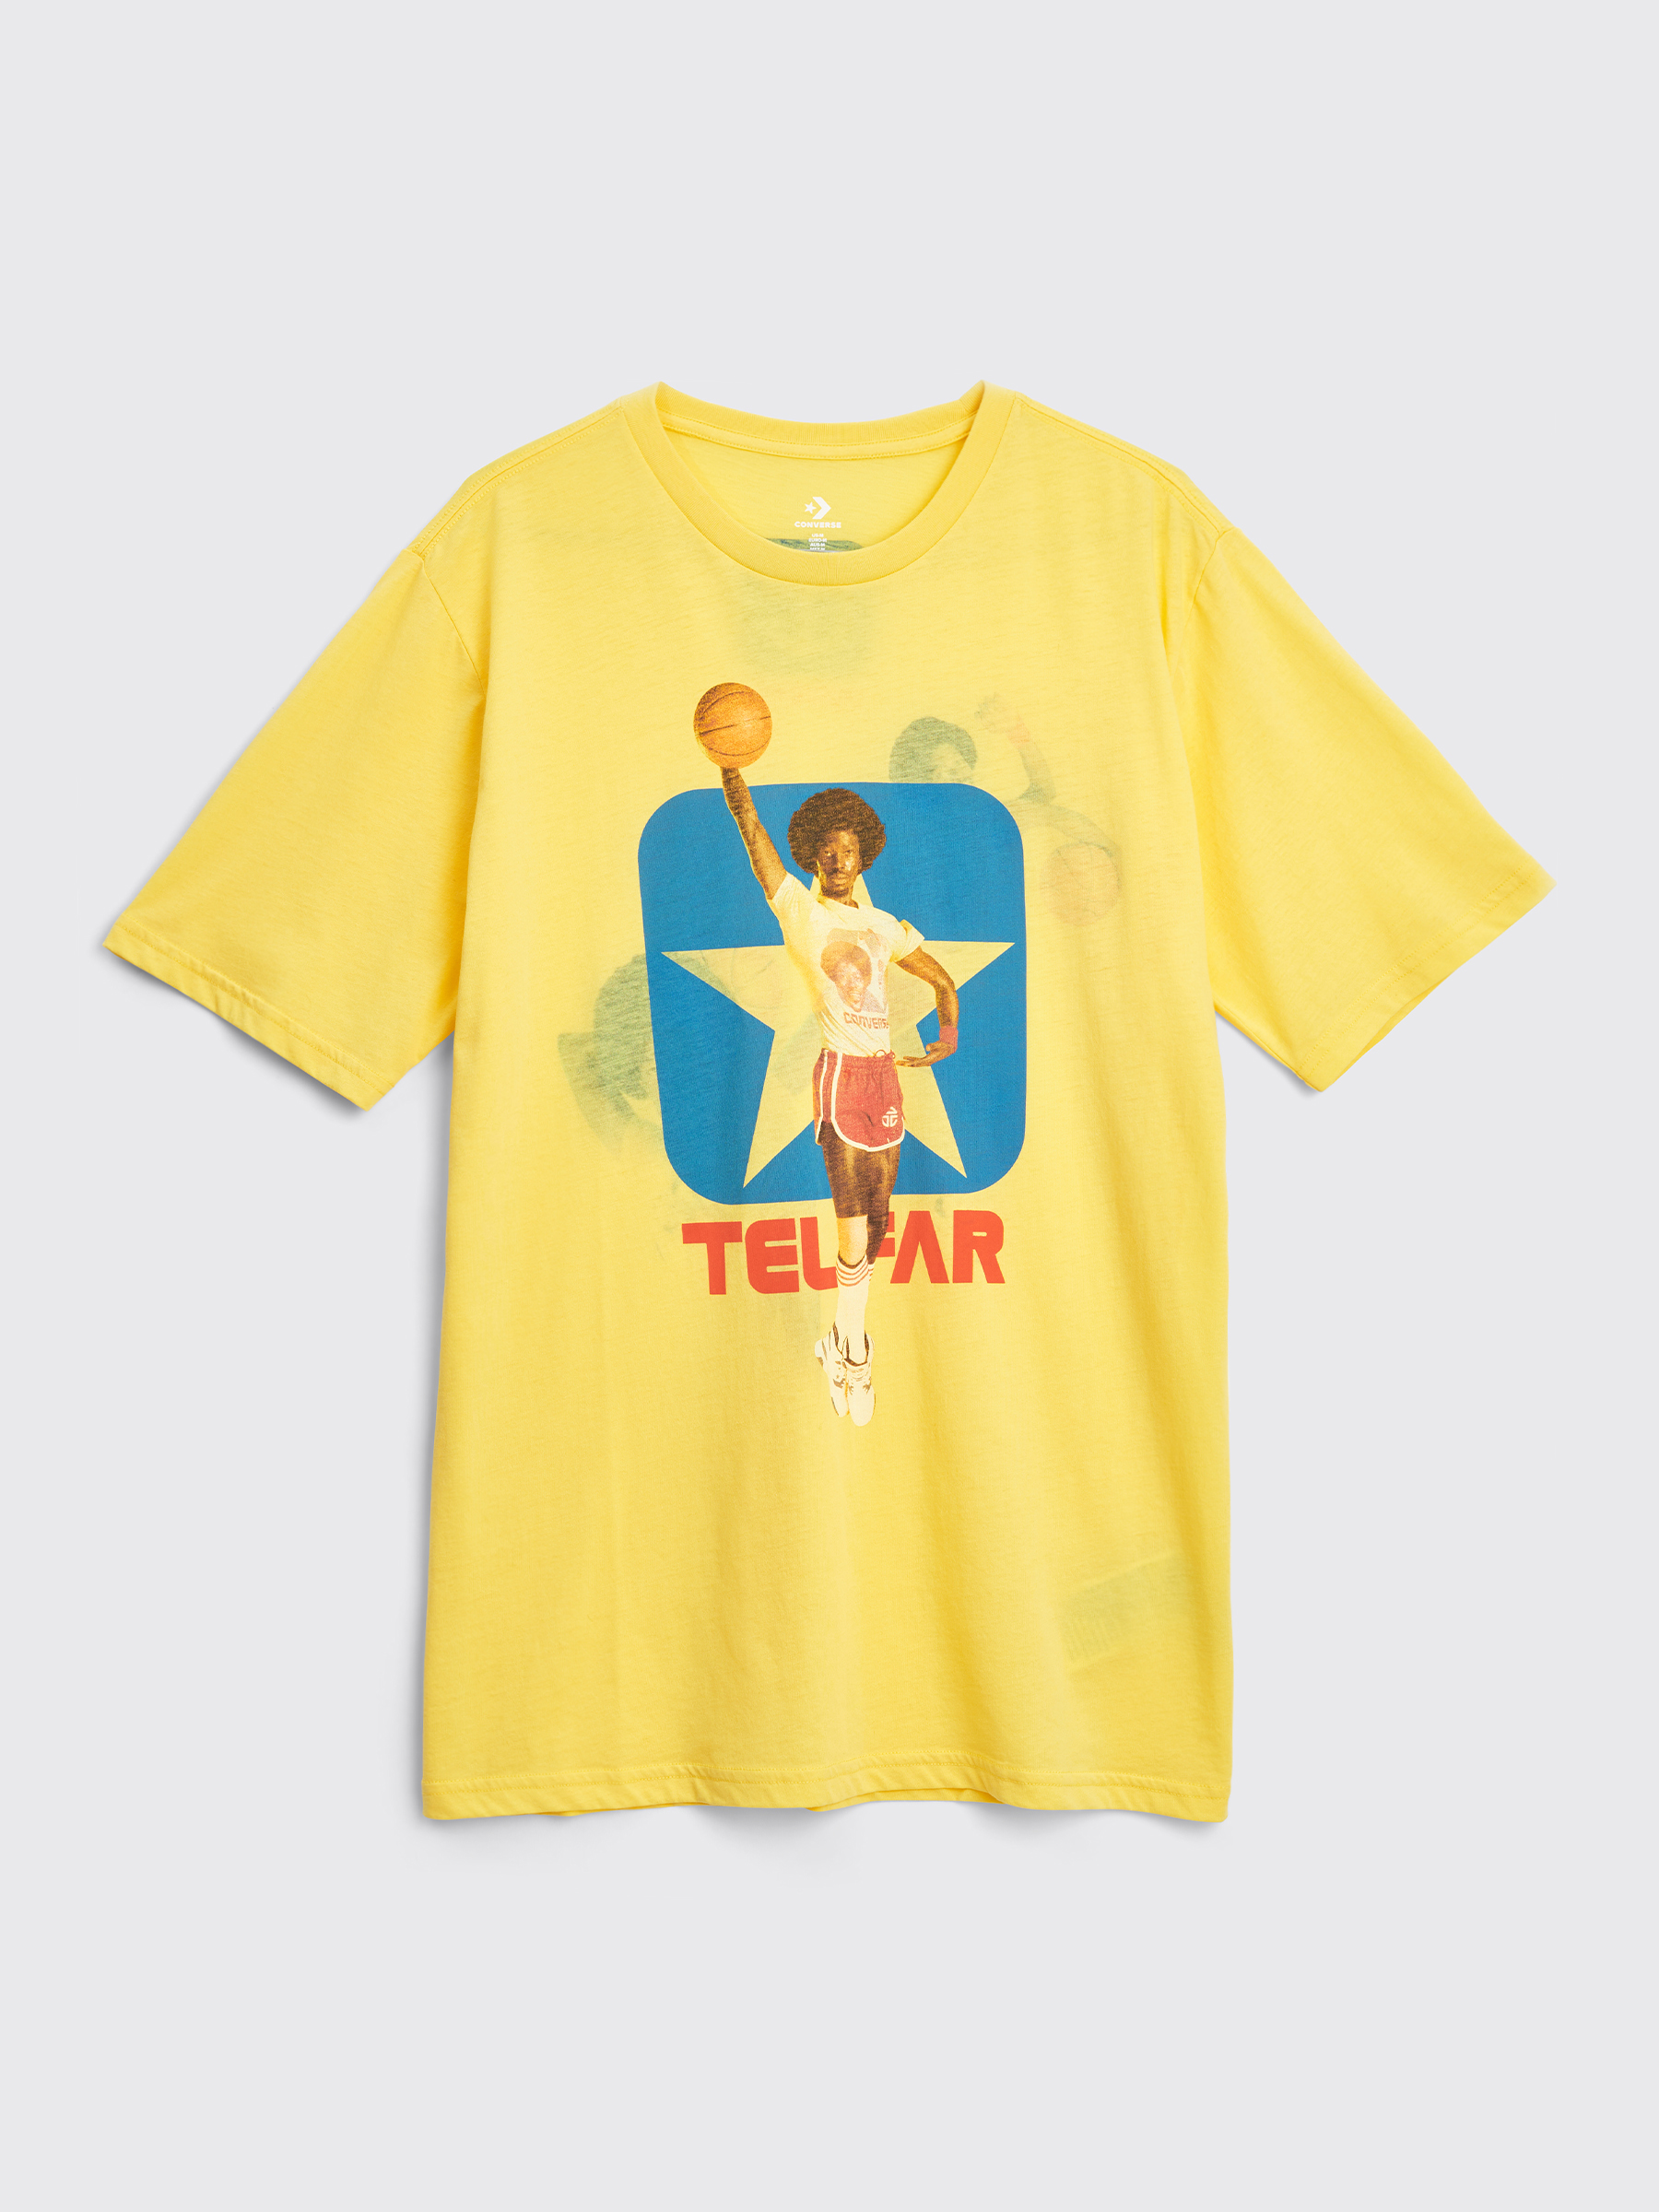 converse yellow t shirt